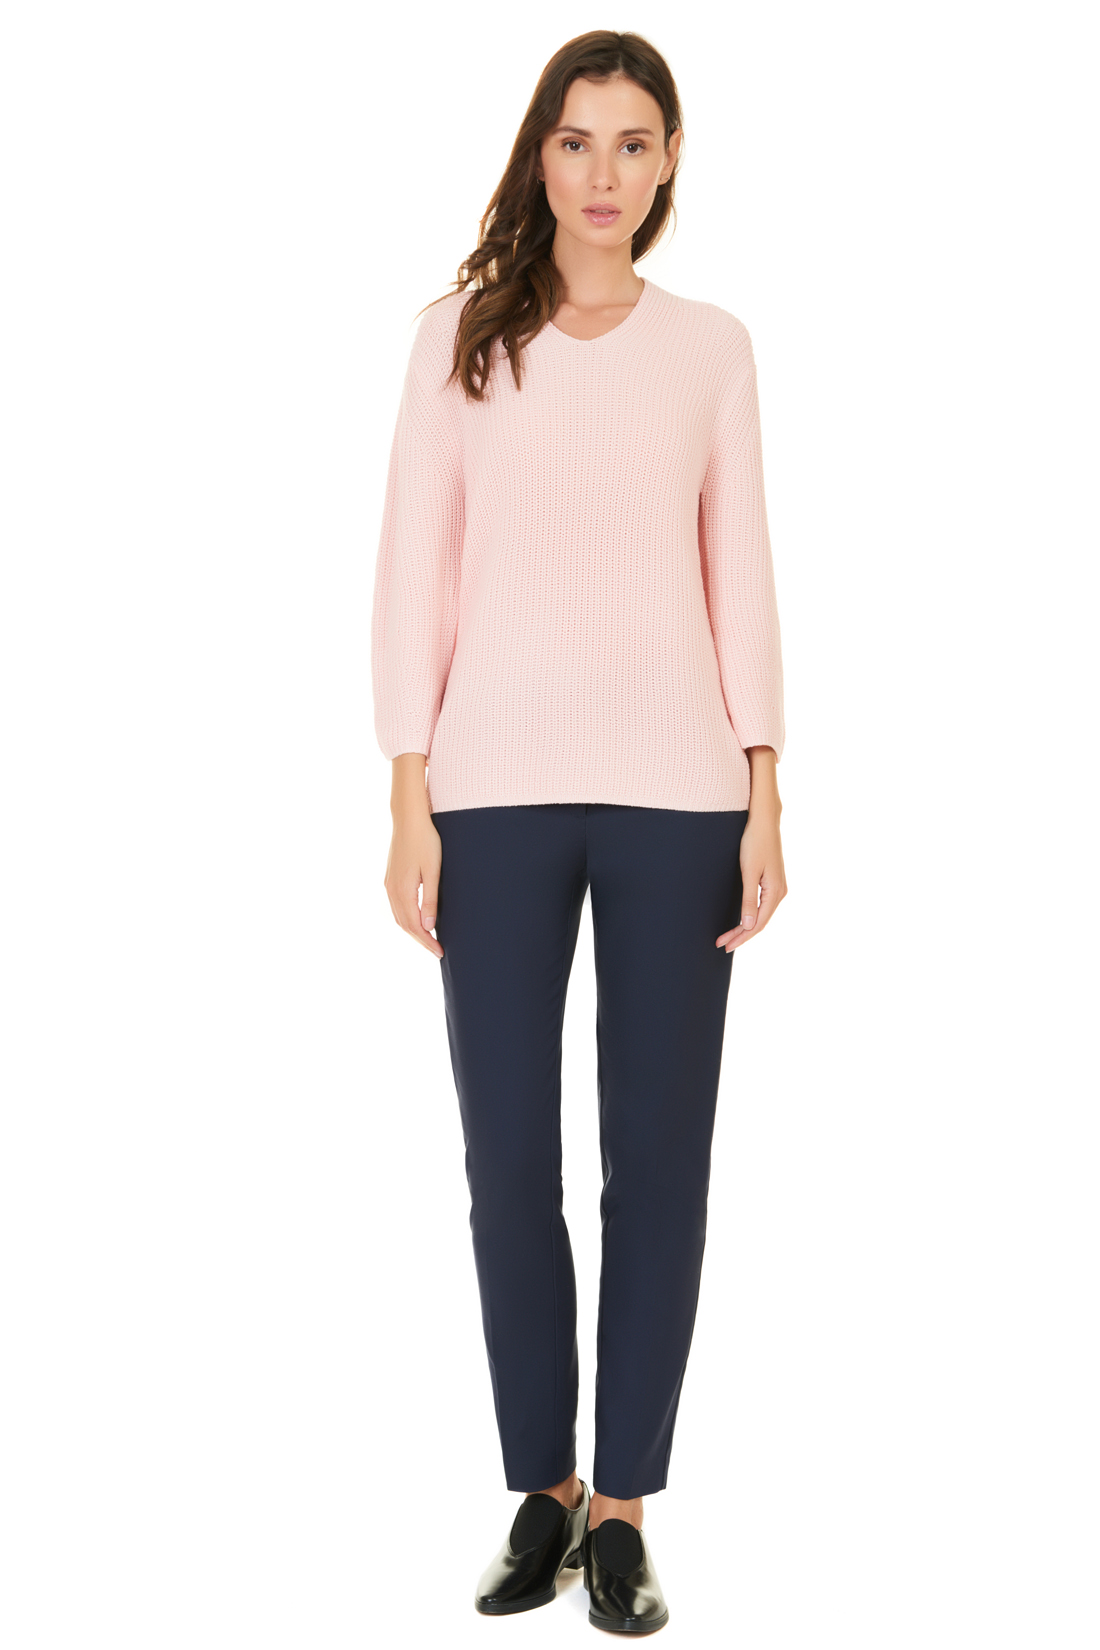 Пуловер оригинального кроя (арт. baon B137504), размер XXL, цвет розовый Пуловер оригинального кроя (арт. baon B137504) - фото 5